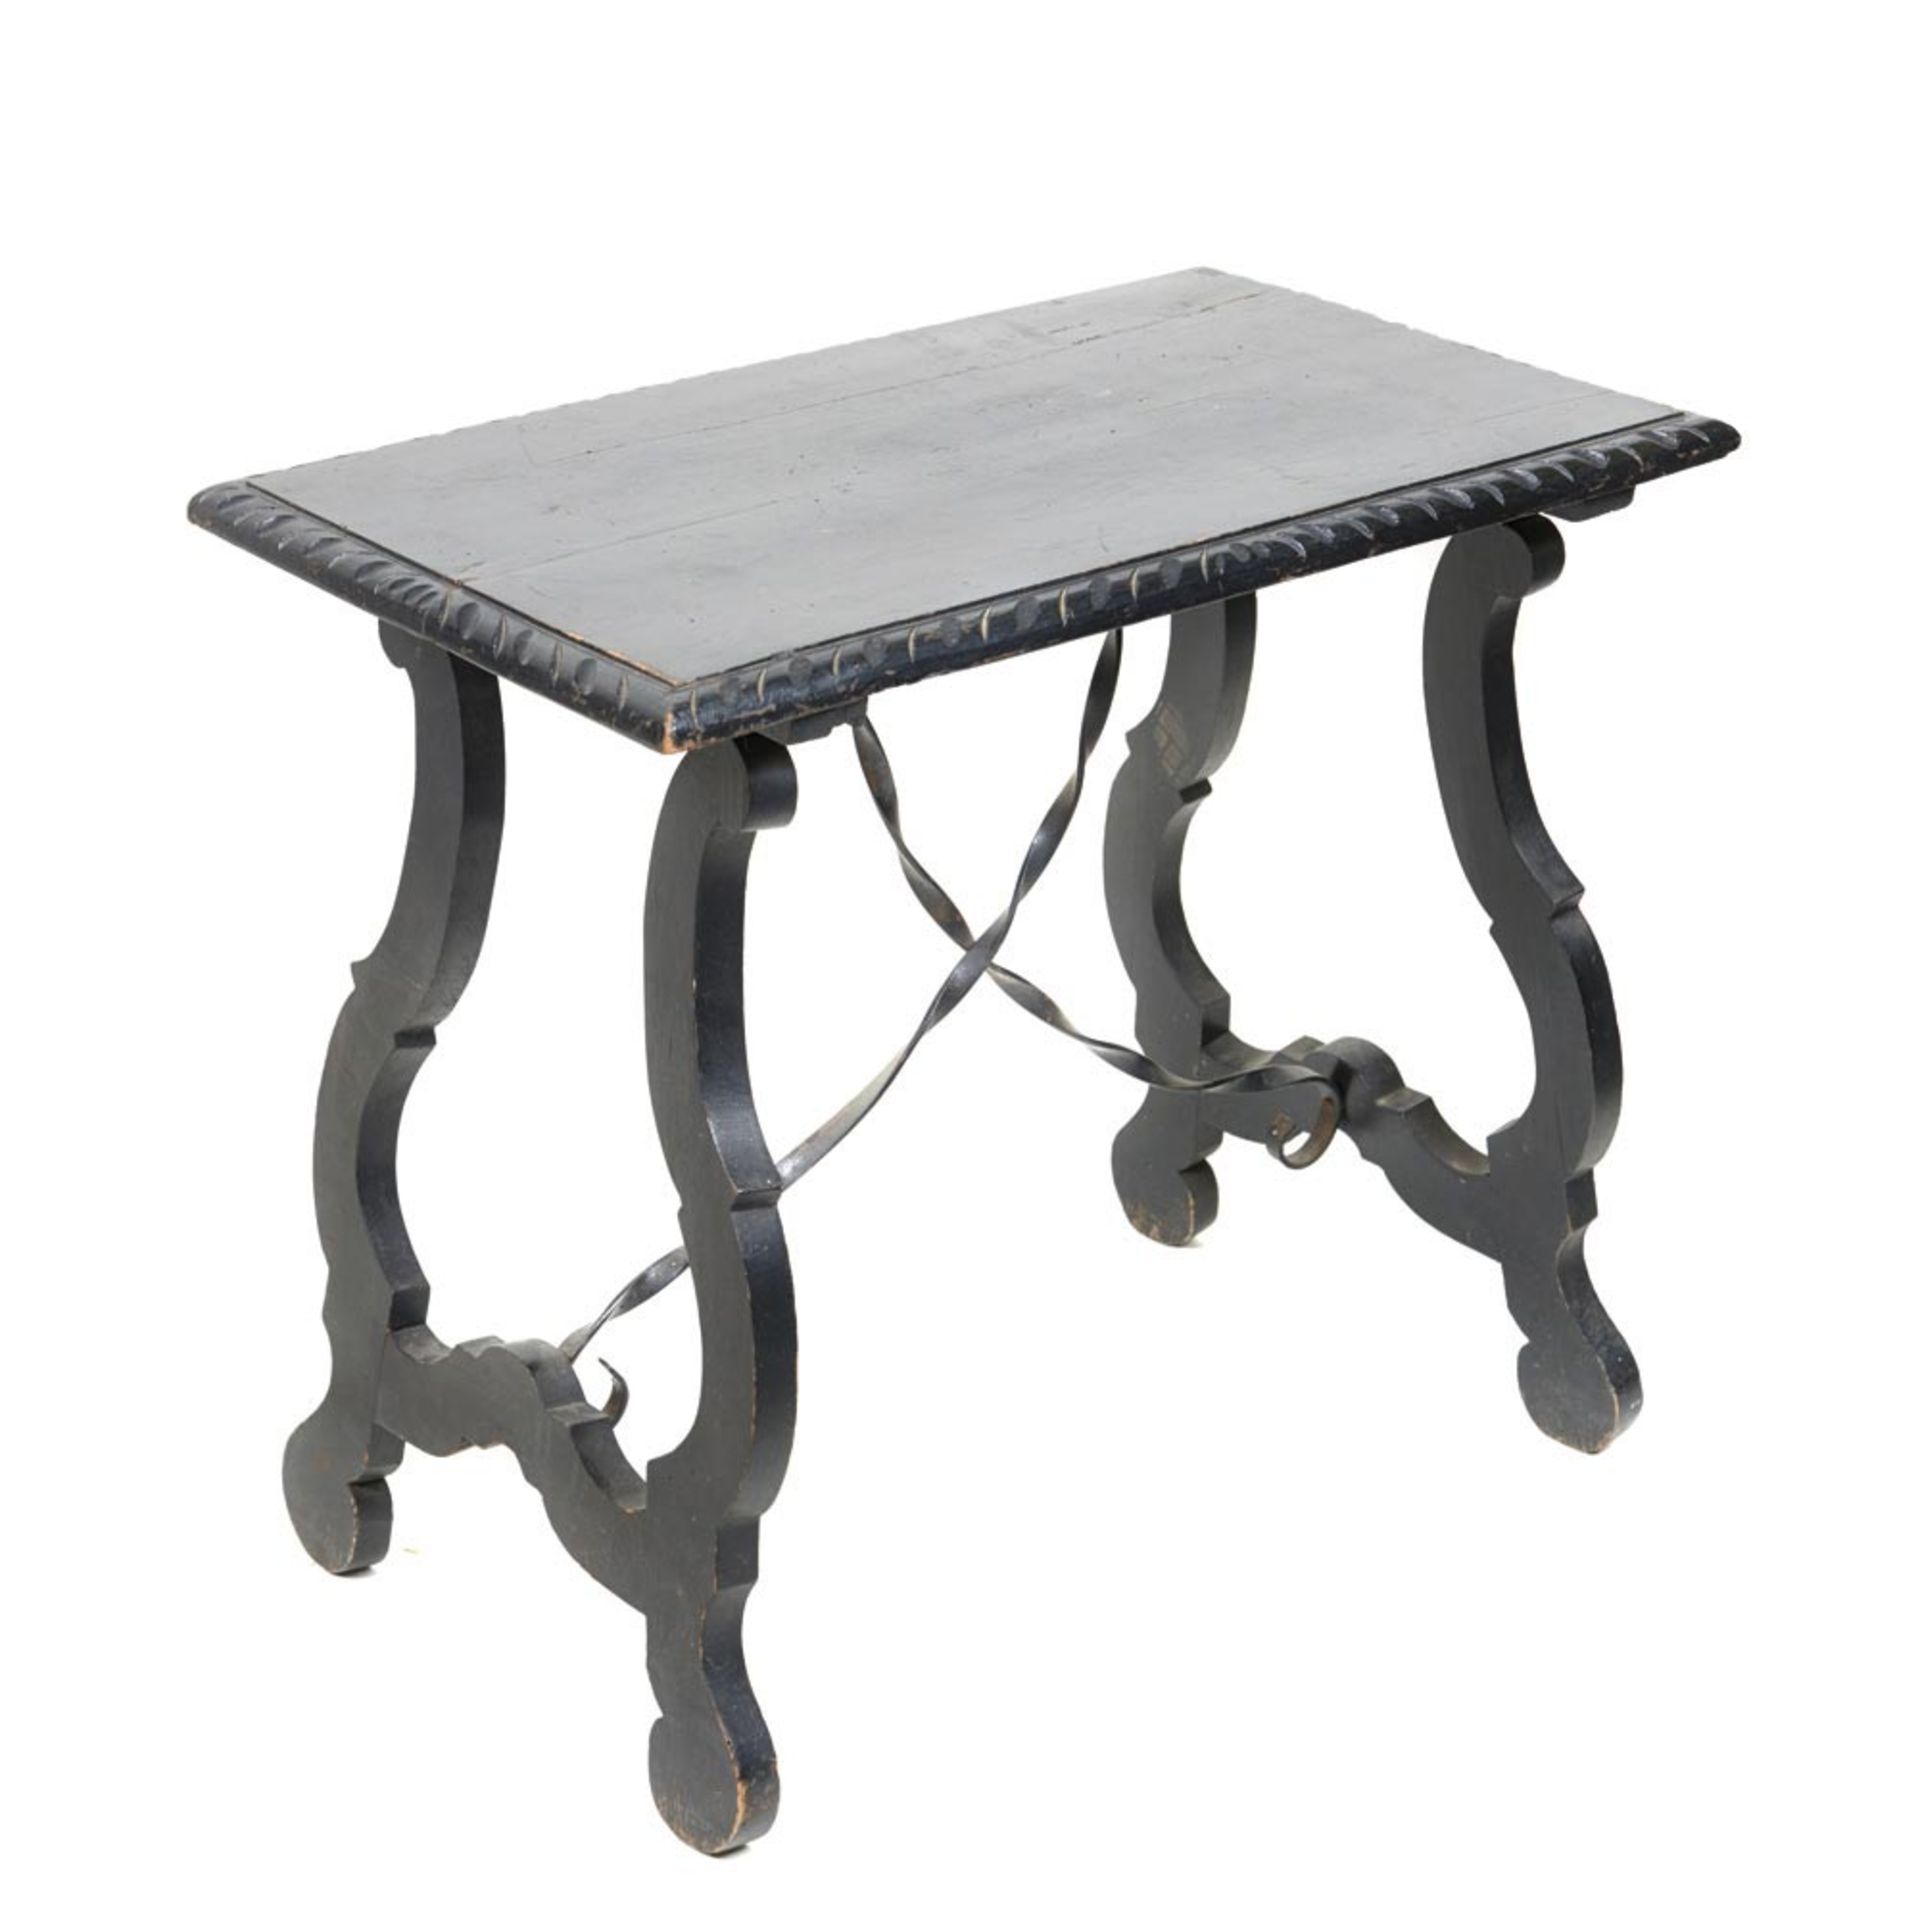 Spanish carved wood and iron table. Mesa tipo castellana en madera tallada con patas de lira